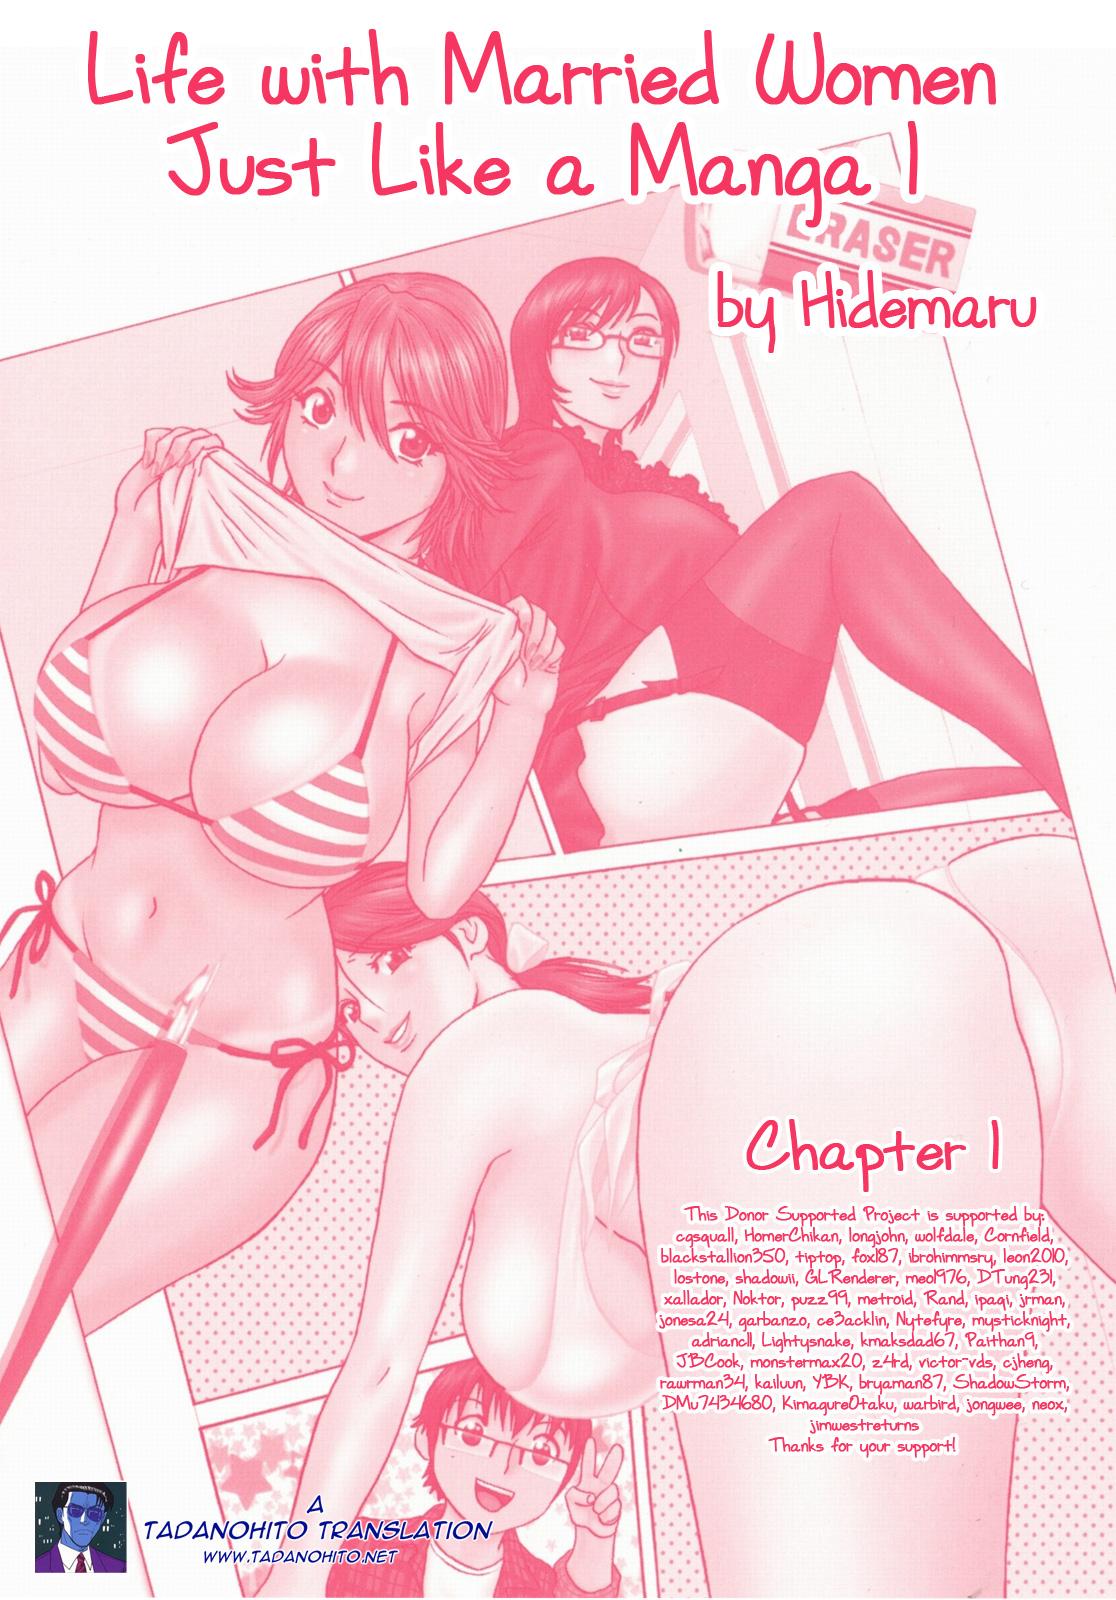 [Hidemaru] Life with Married Women Just Like a Manga 1 - Ch. 1-8 [English] {Tadanohito} 25